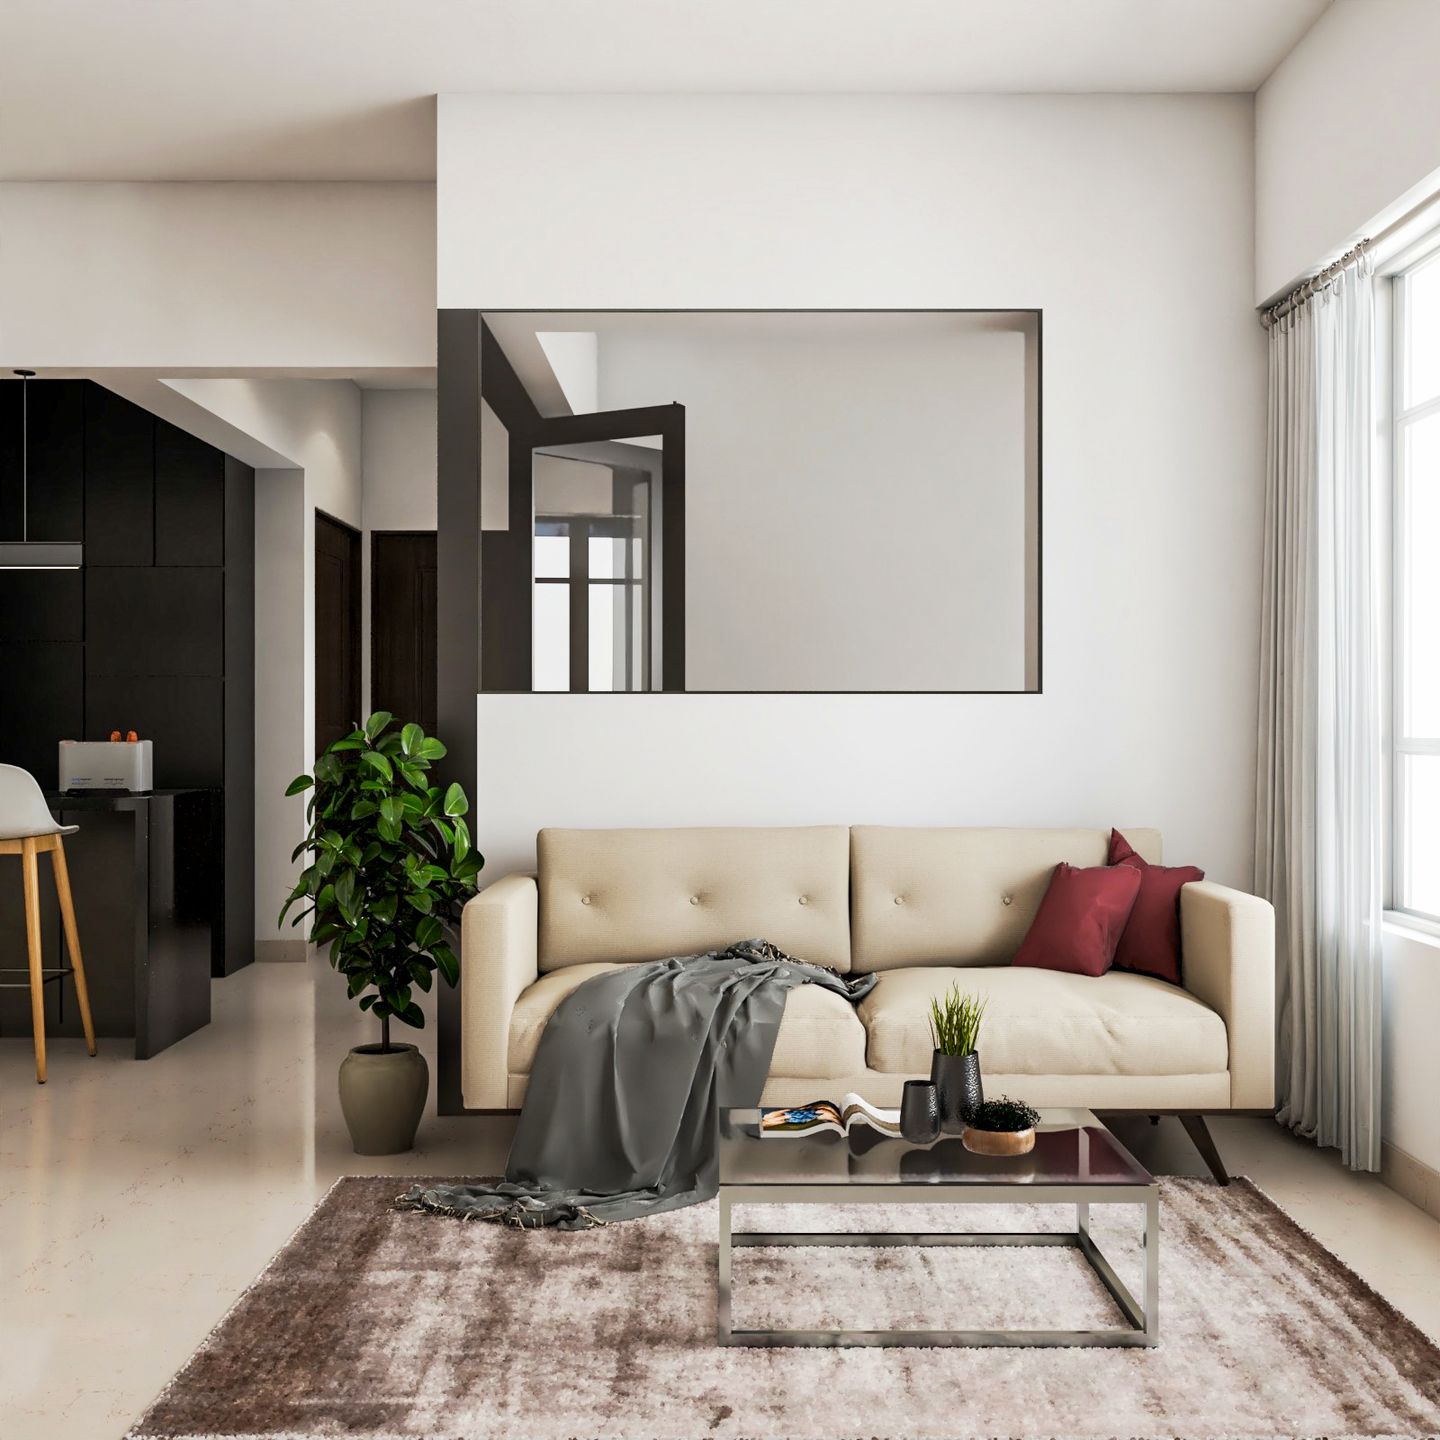 Compact living room design with indoor plants - Livspace